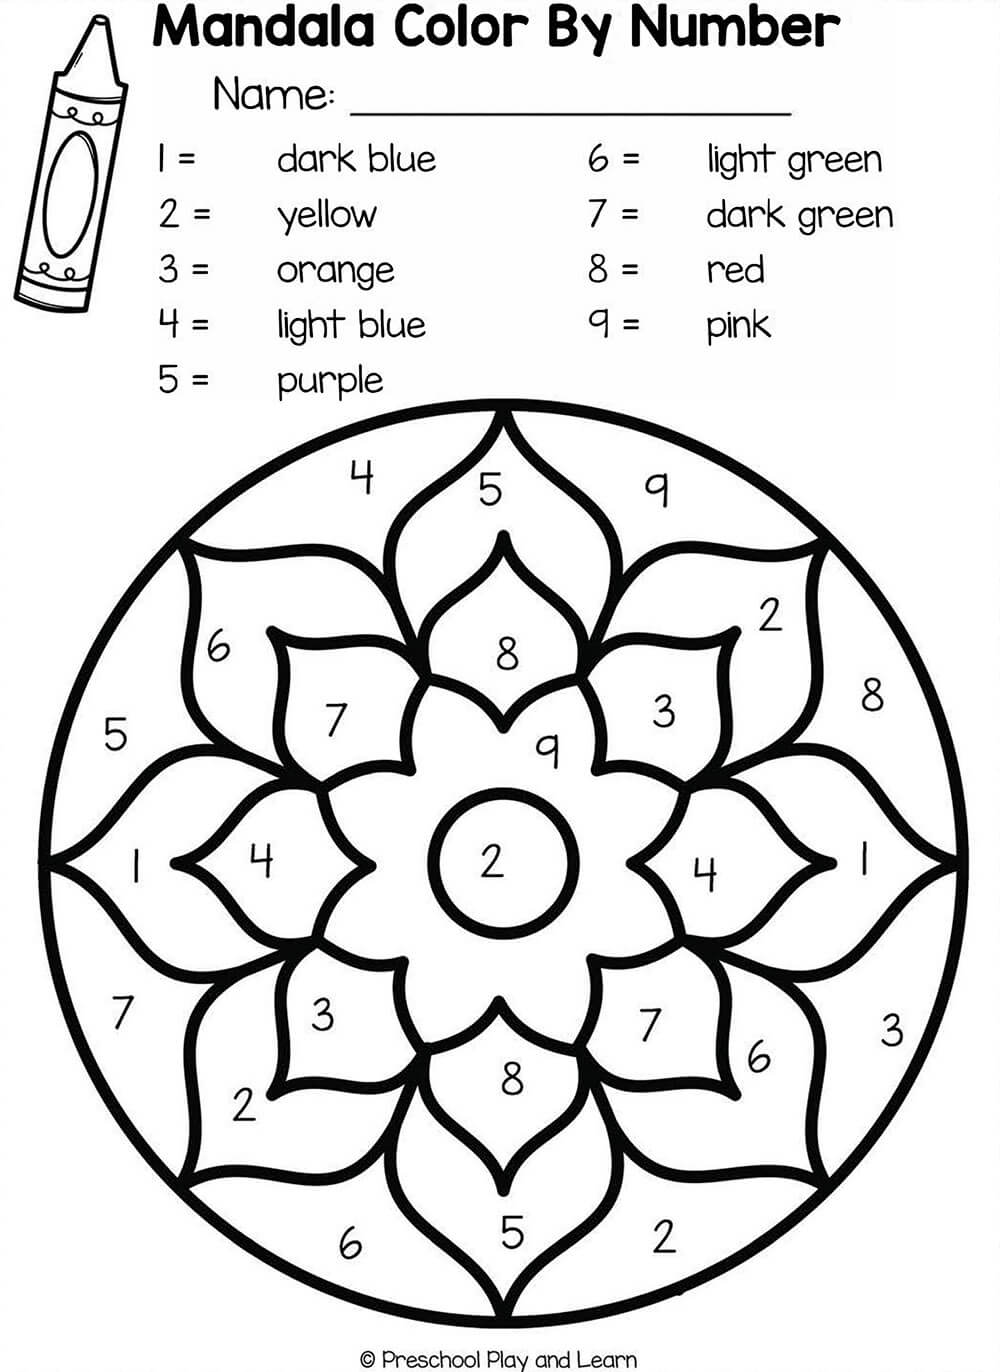 Mandala Color by Number - sheet 8